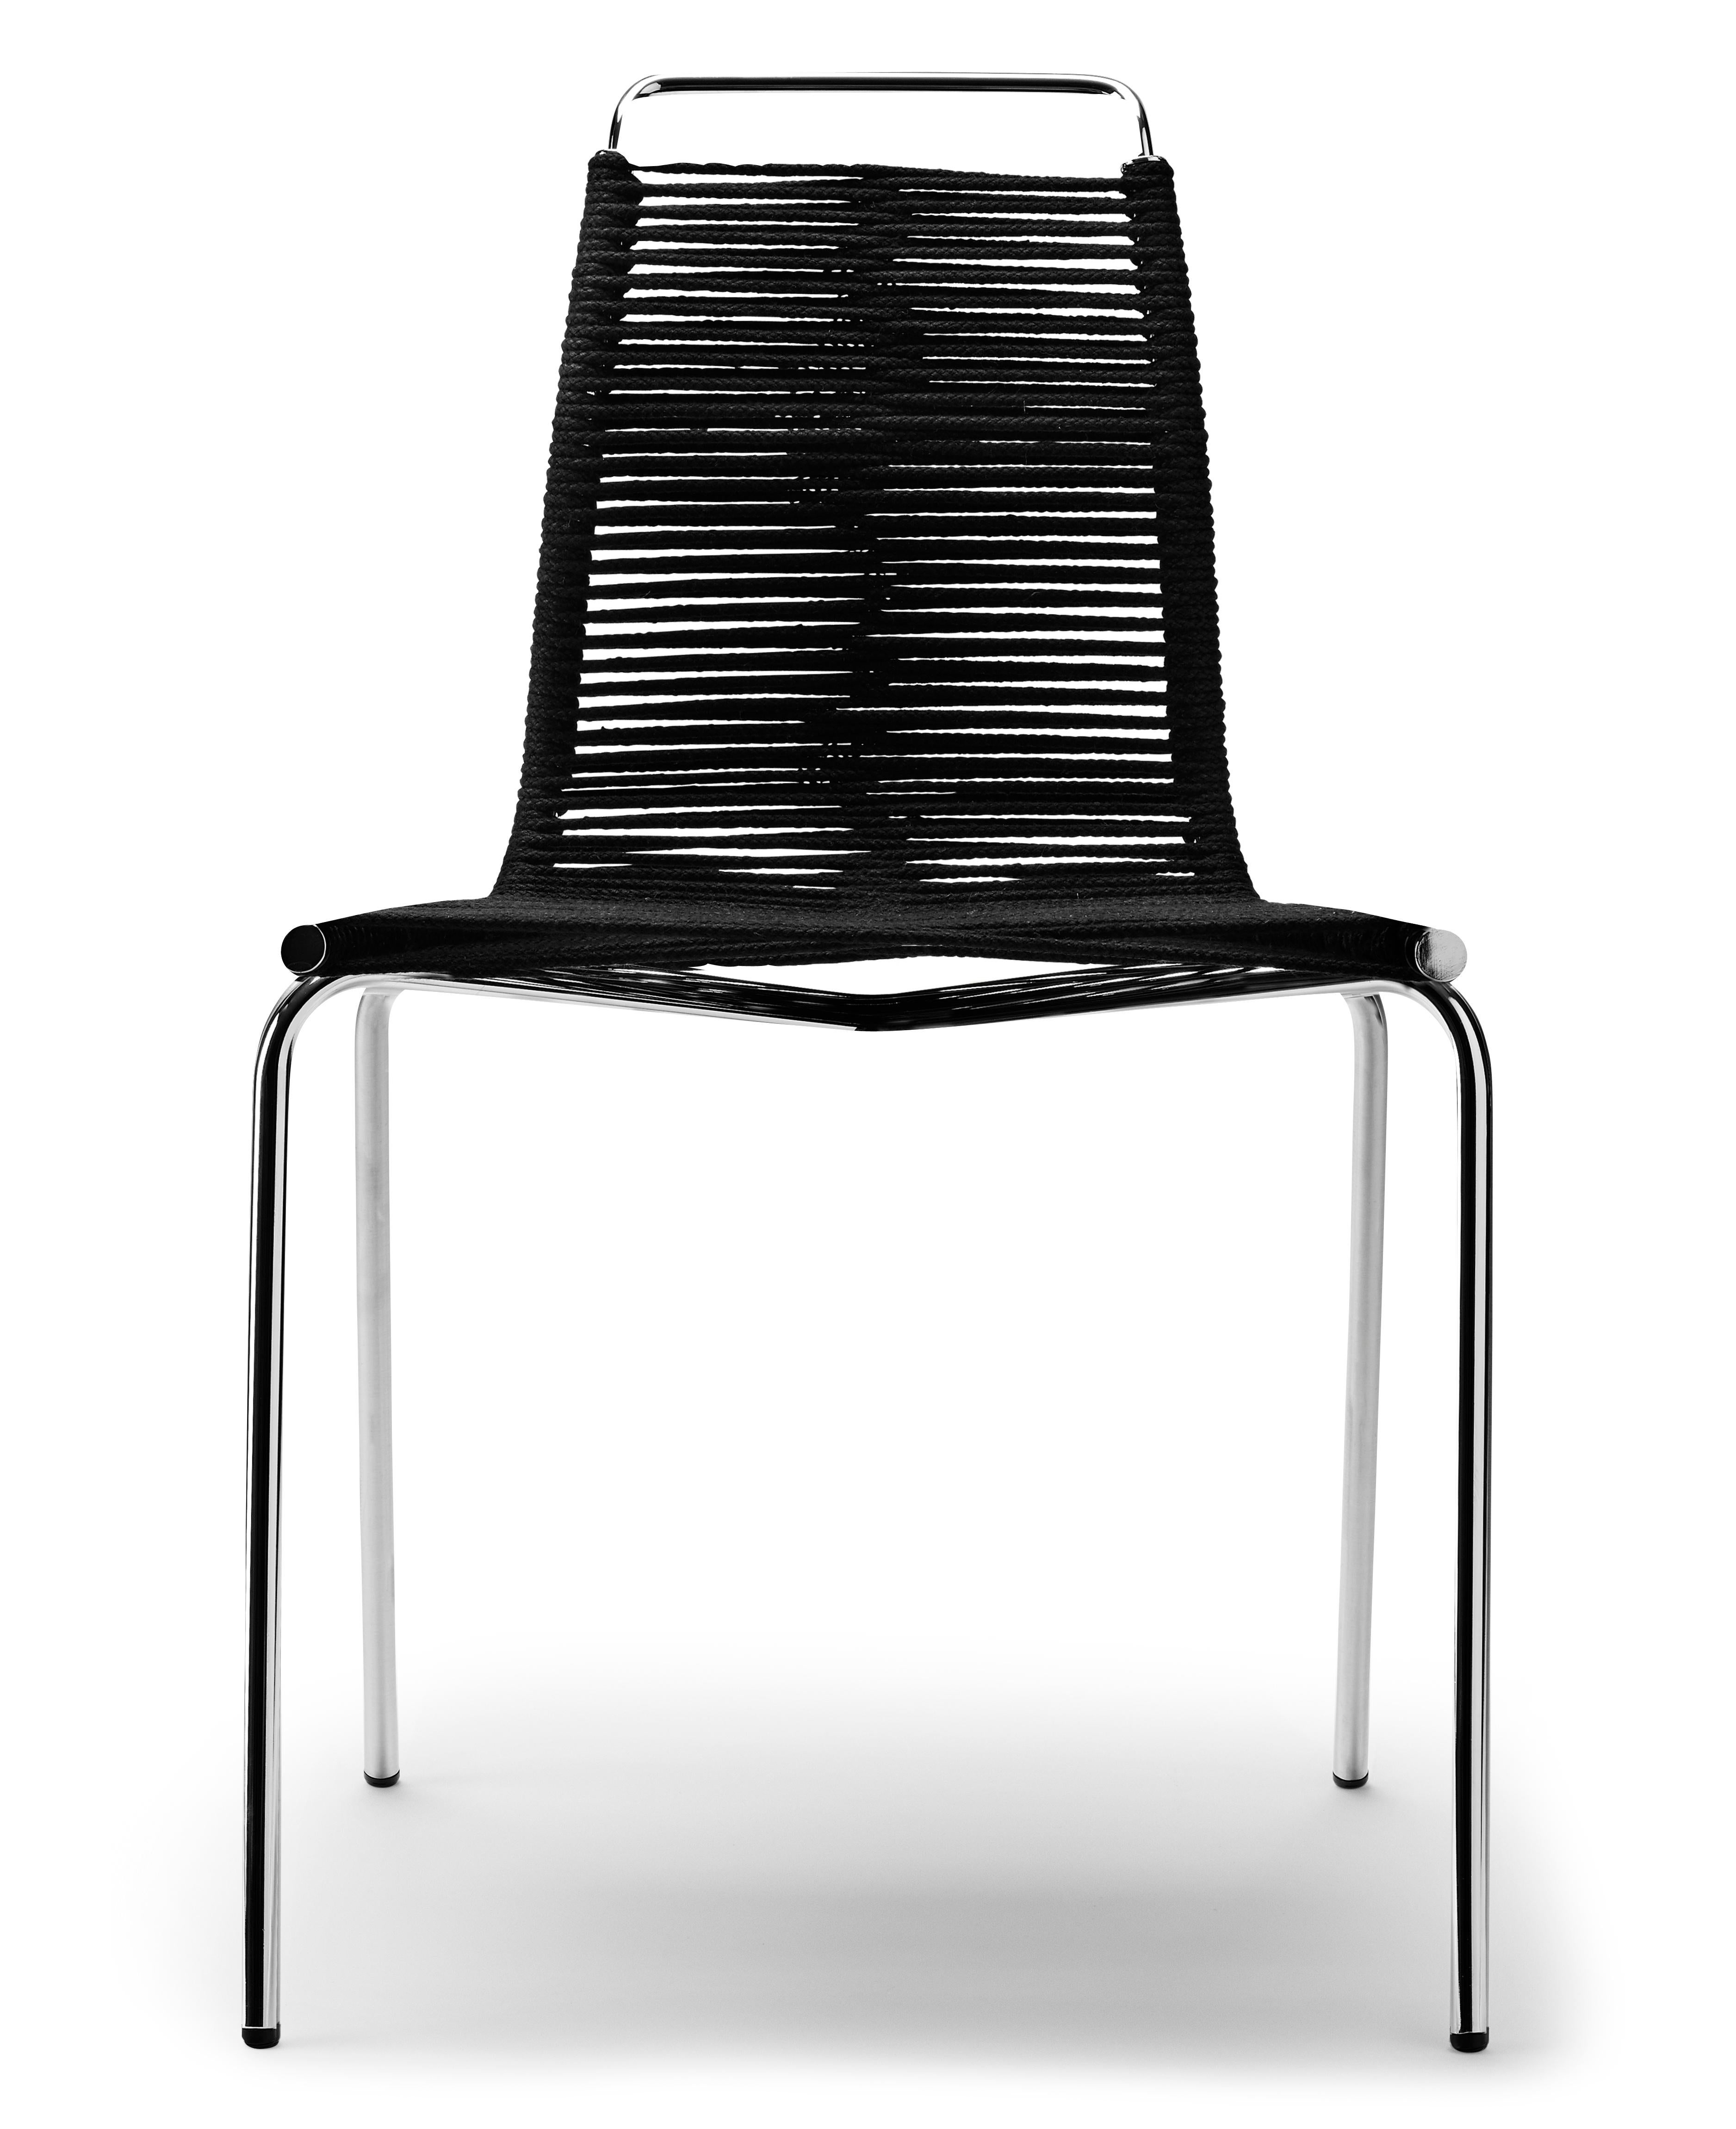 Beige (Woven Flag Halyard Natural-Black) PK1 Dining Chair in Chrome Base by Poul Kjærholm